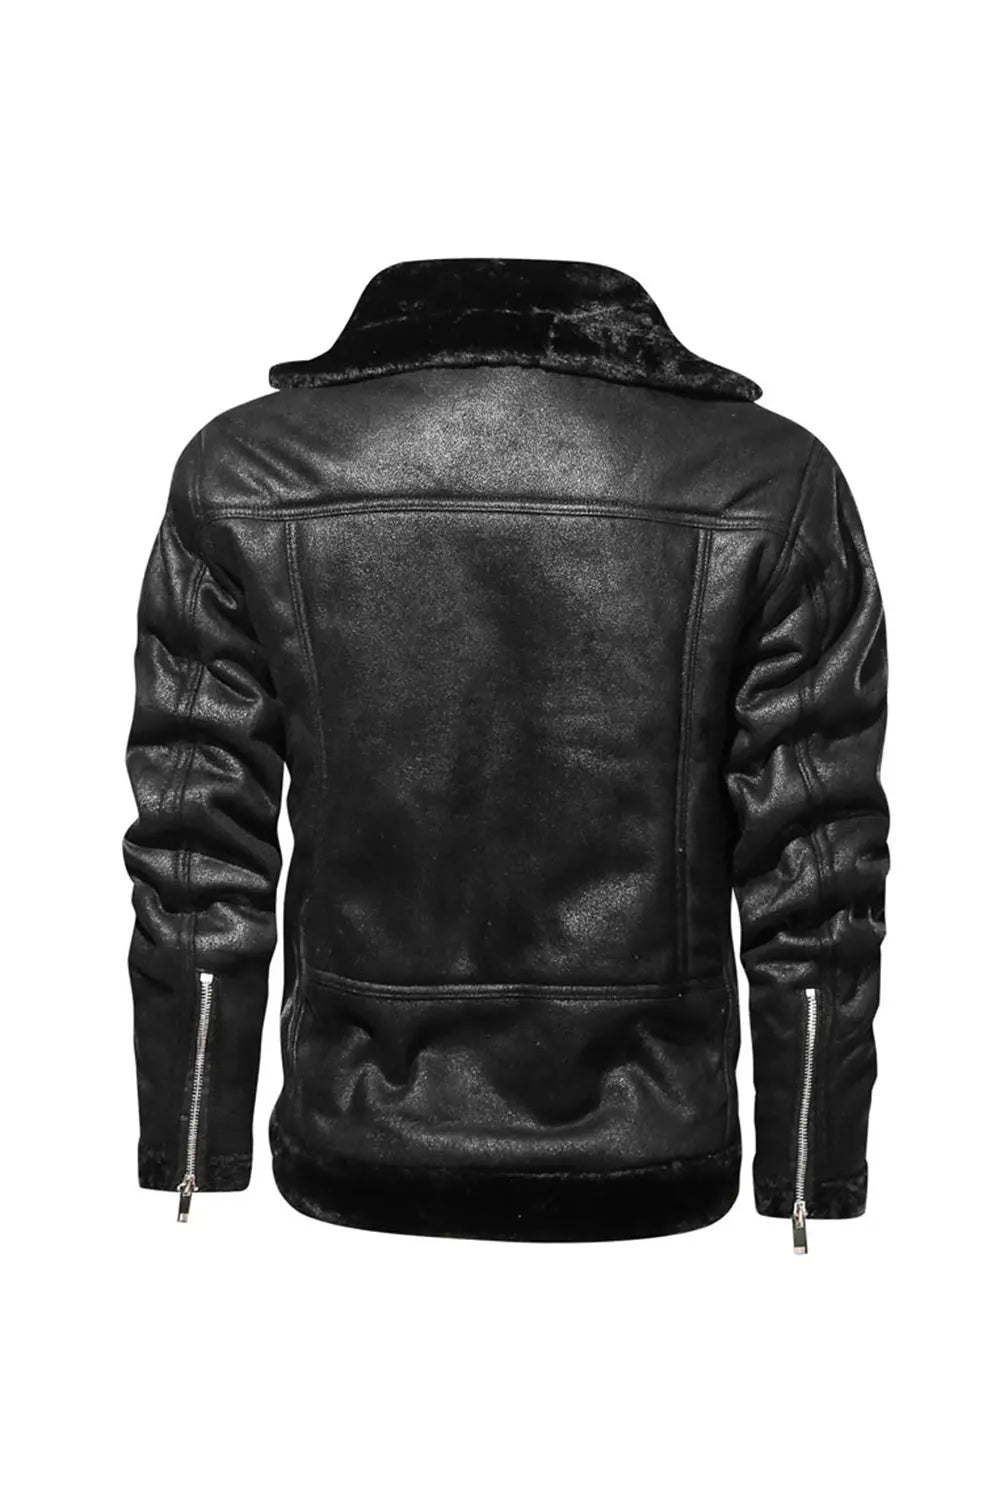 Leather Jacket With Velvet - Black - Strange Clothes